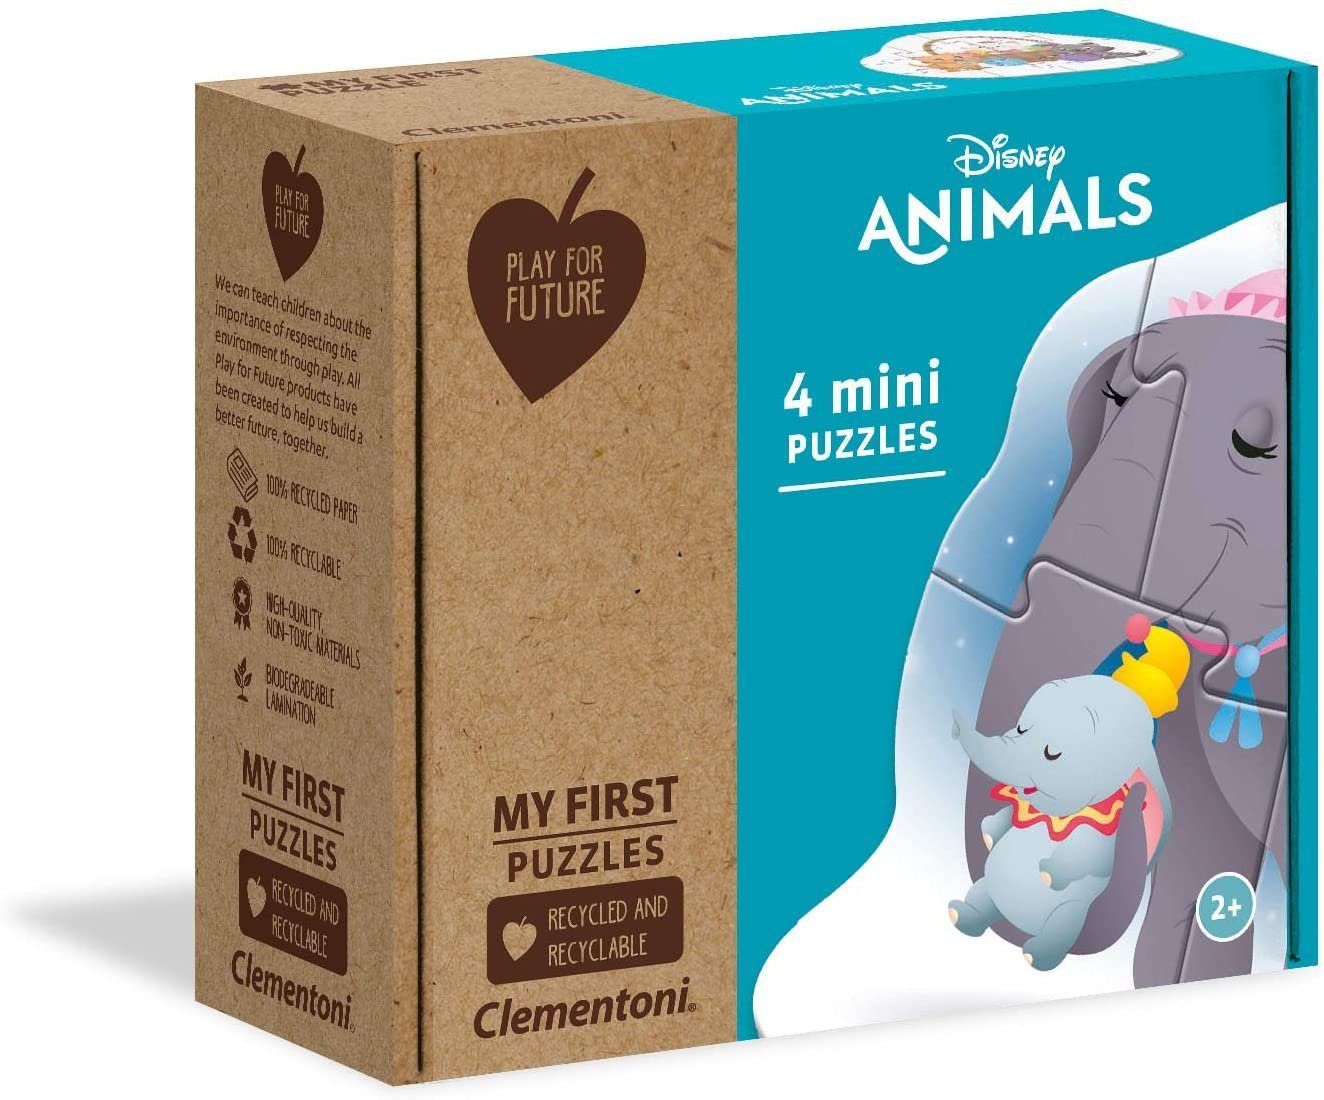 Clementoni® Puzzle Play Friends Future 4 Puzzleteile Animal Mini-Puzzle for 6, 12 Teile, Disney 9, 3